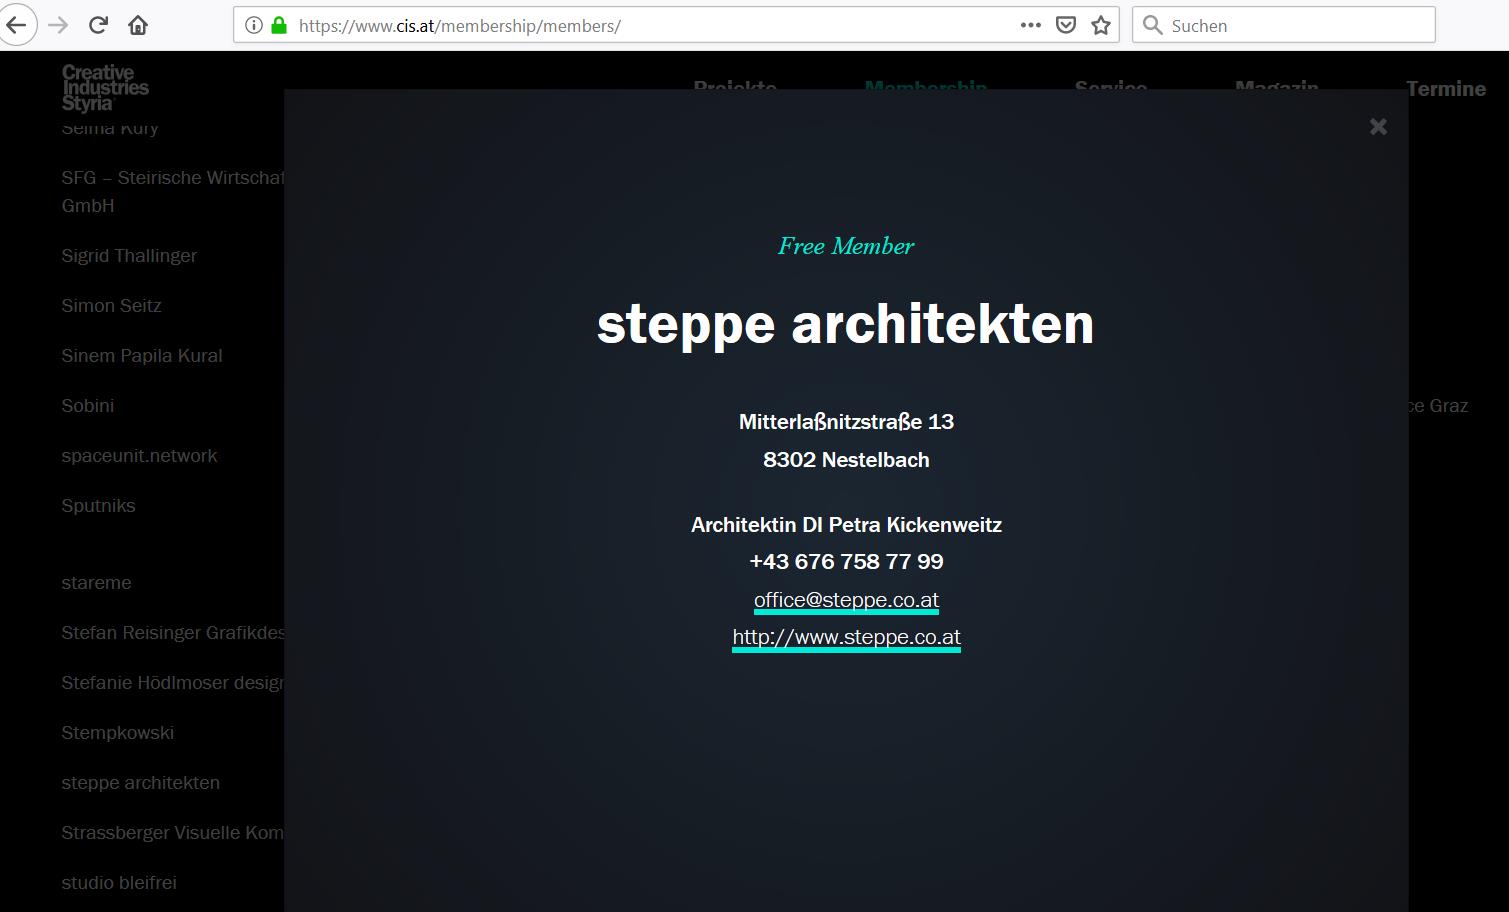 steppe architekten - news -Members of Creative Industries Styria